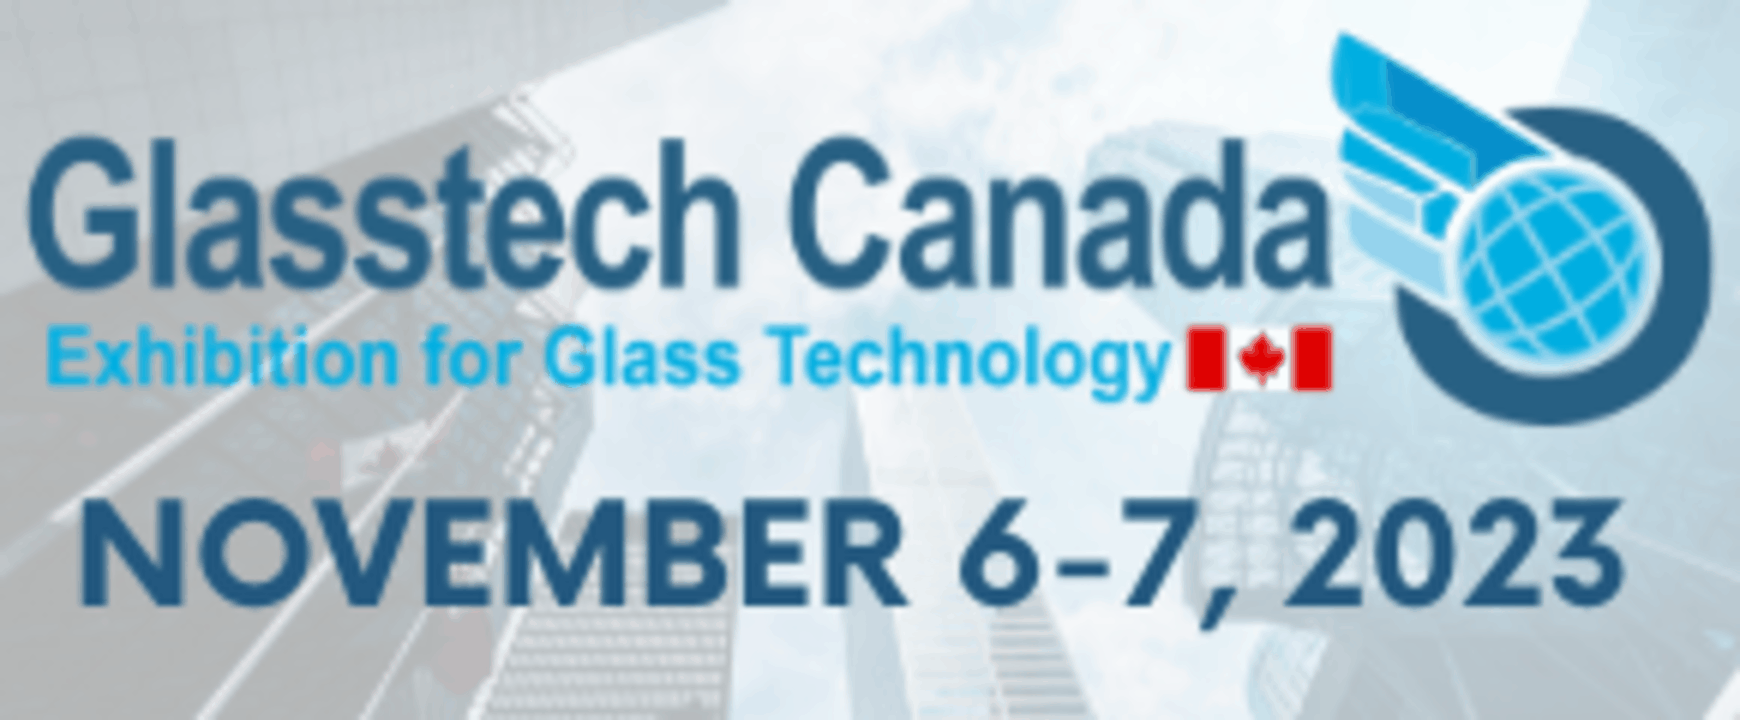 Glasstech Canada 2023